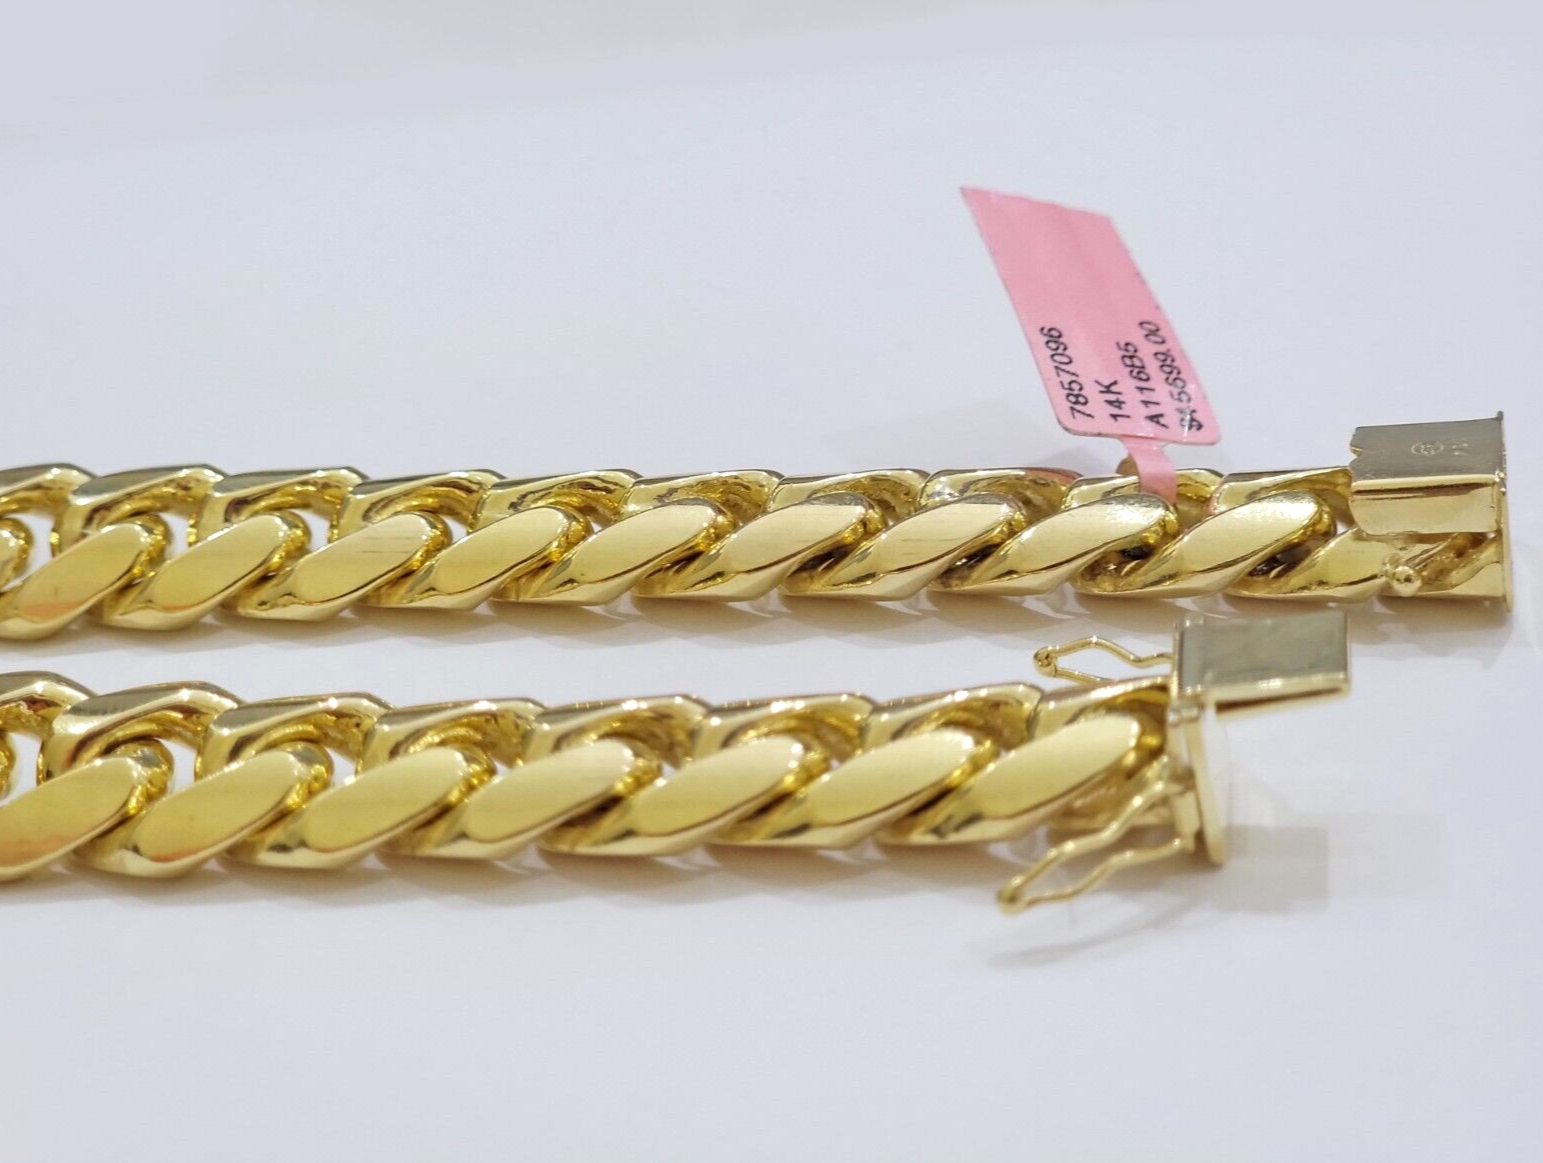 14k Solid Gold bracelet Miami Cuban Link 9 Inch 13mm Mens REAL 14 KT SOLID HEAVY